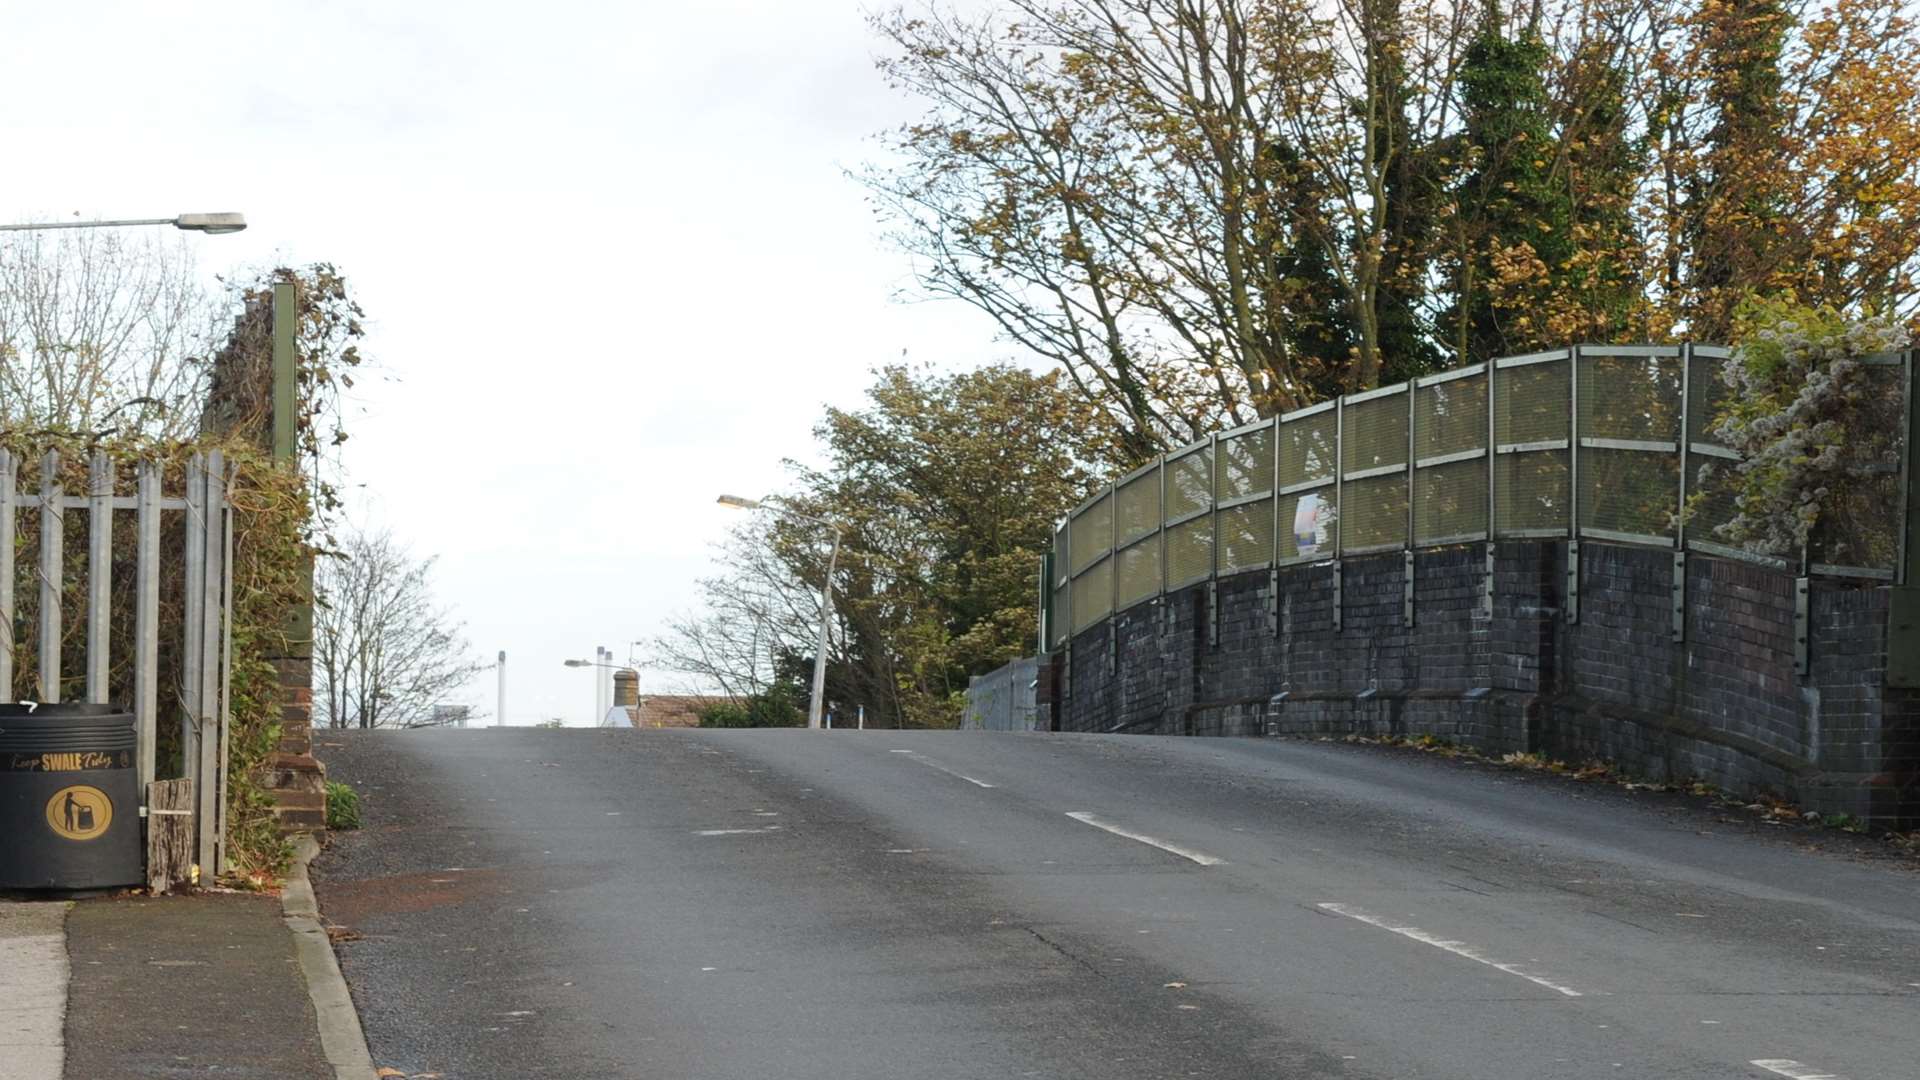 The railway bridge in Staplehurst Road where the tragedy happened